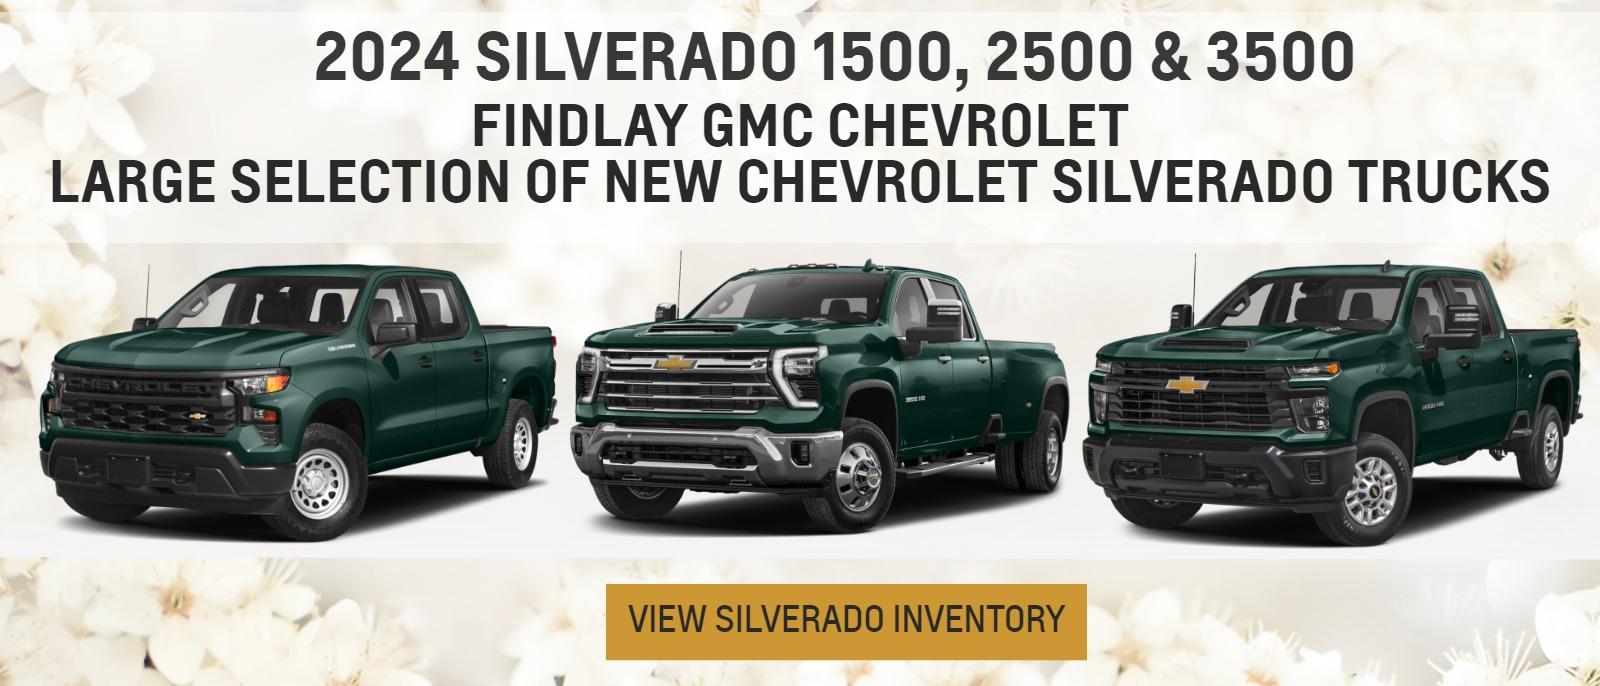 2024 Green Silverado 1500
Findlay GMC Chevrolet
Large Selection of New Chevrolet Silverado's Trucks